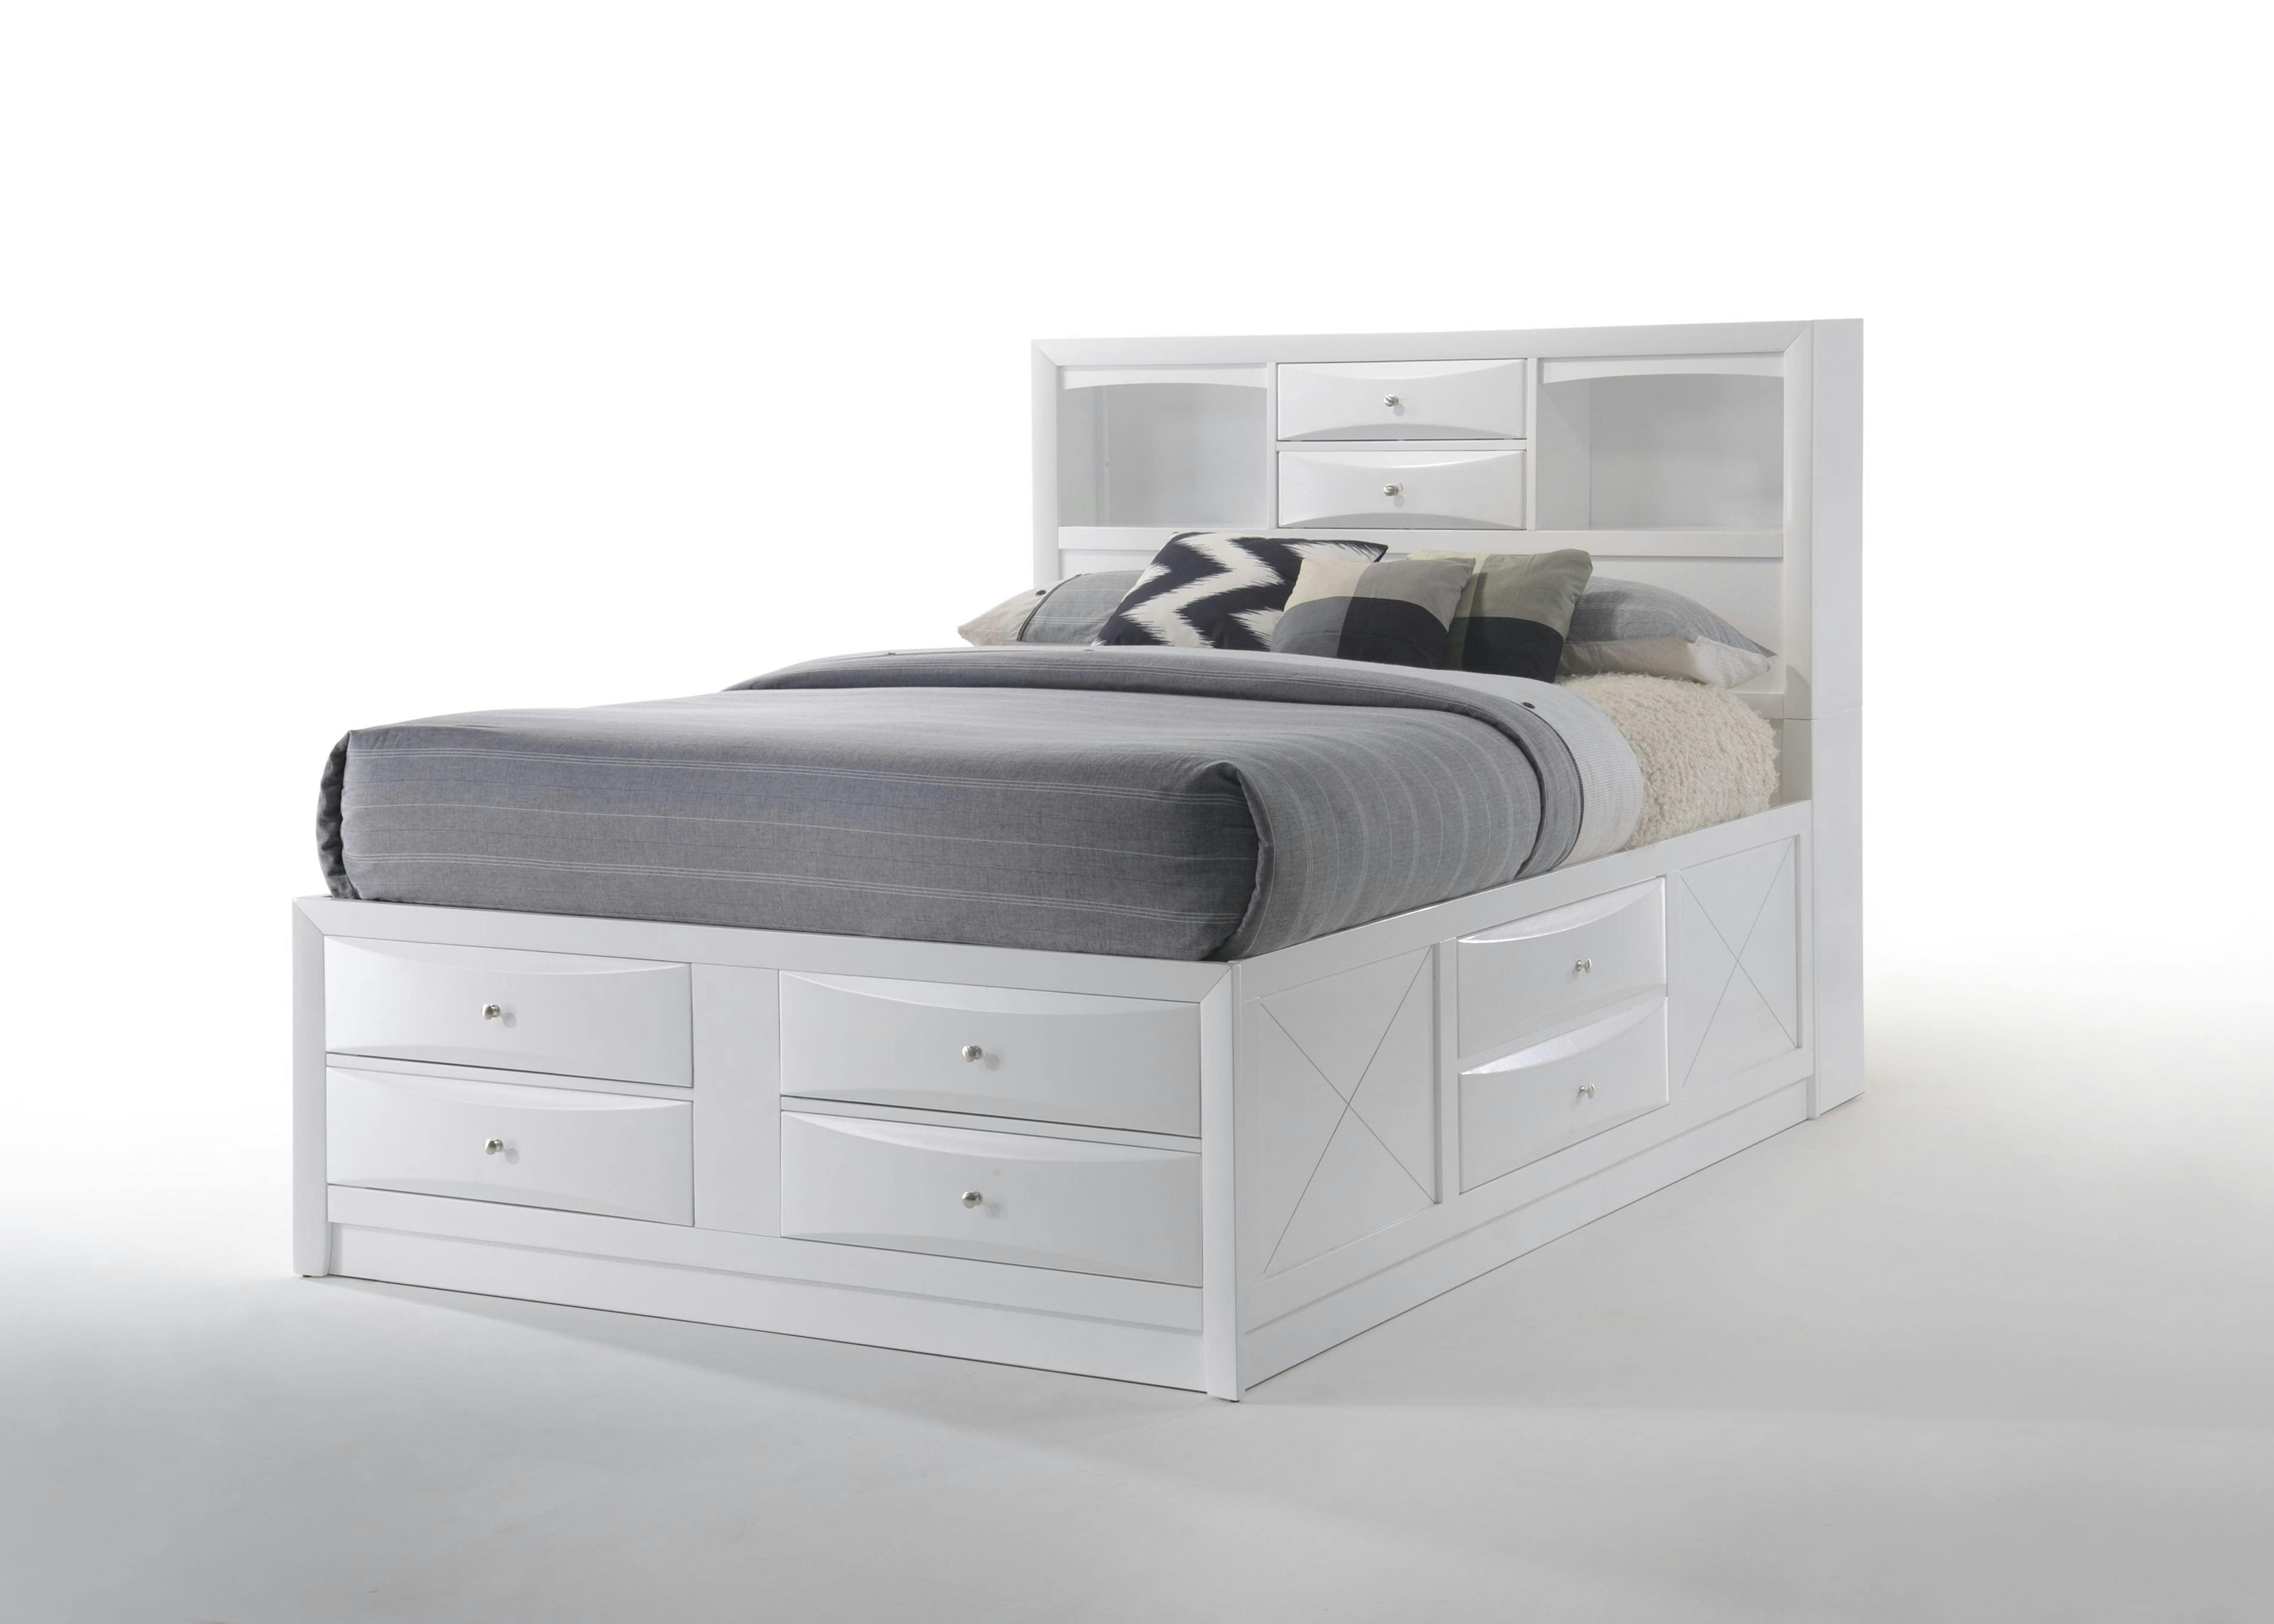 Elegant Full-Size White Wood Frame Storage Bed with Bookcase Headboard